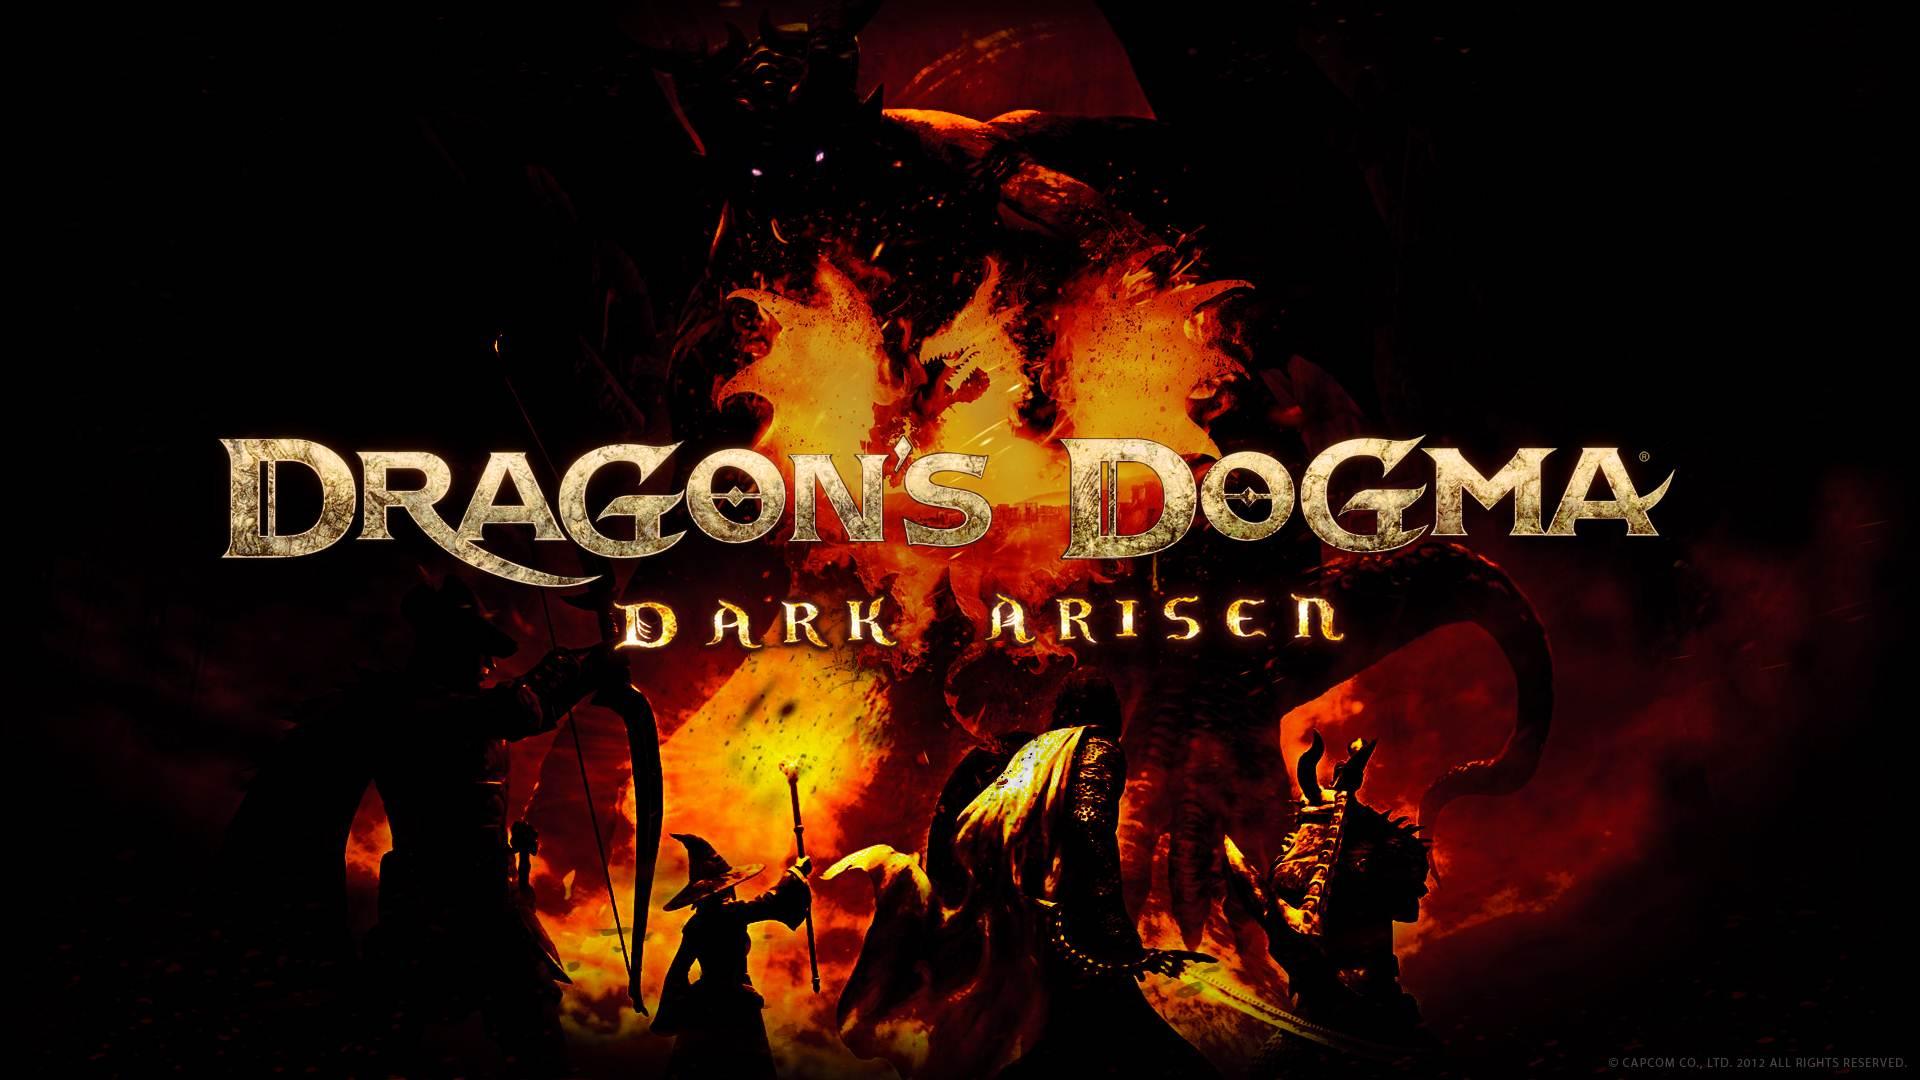 Dragon's Dogma: Dark Arisen wallpaper High Resolution and Quality